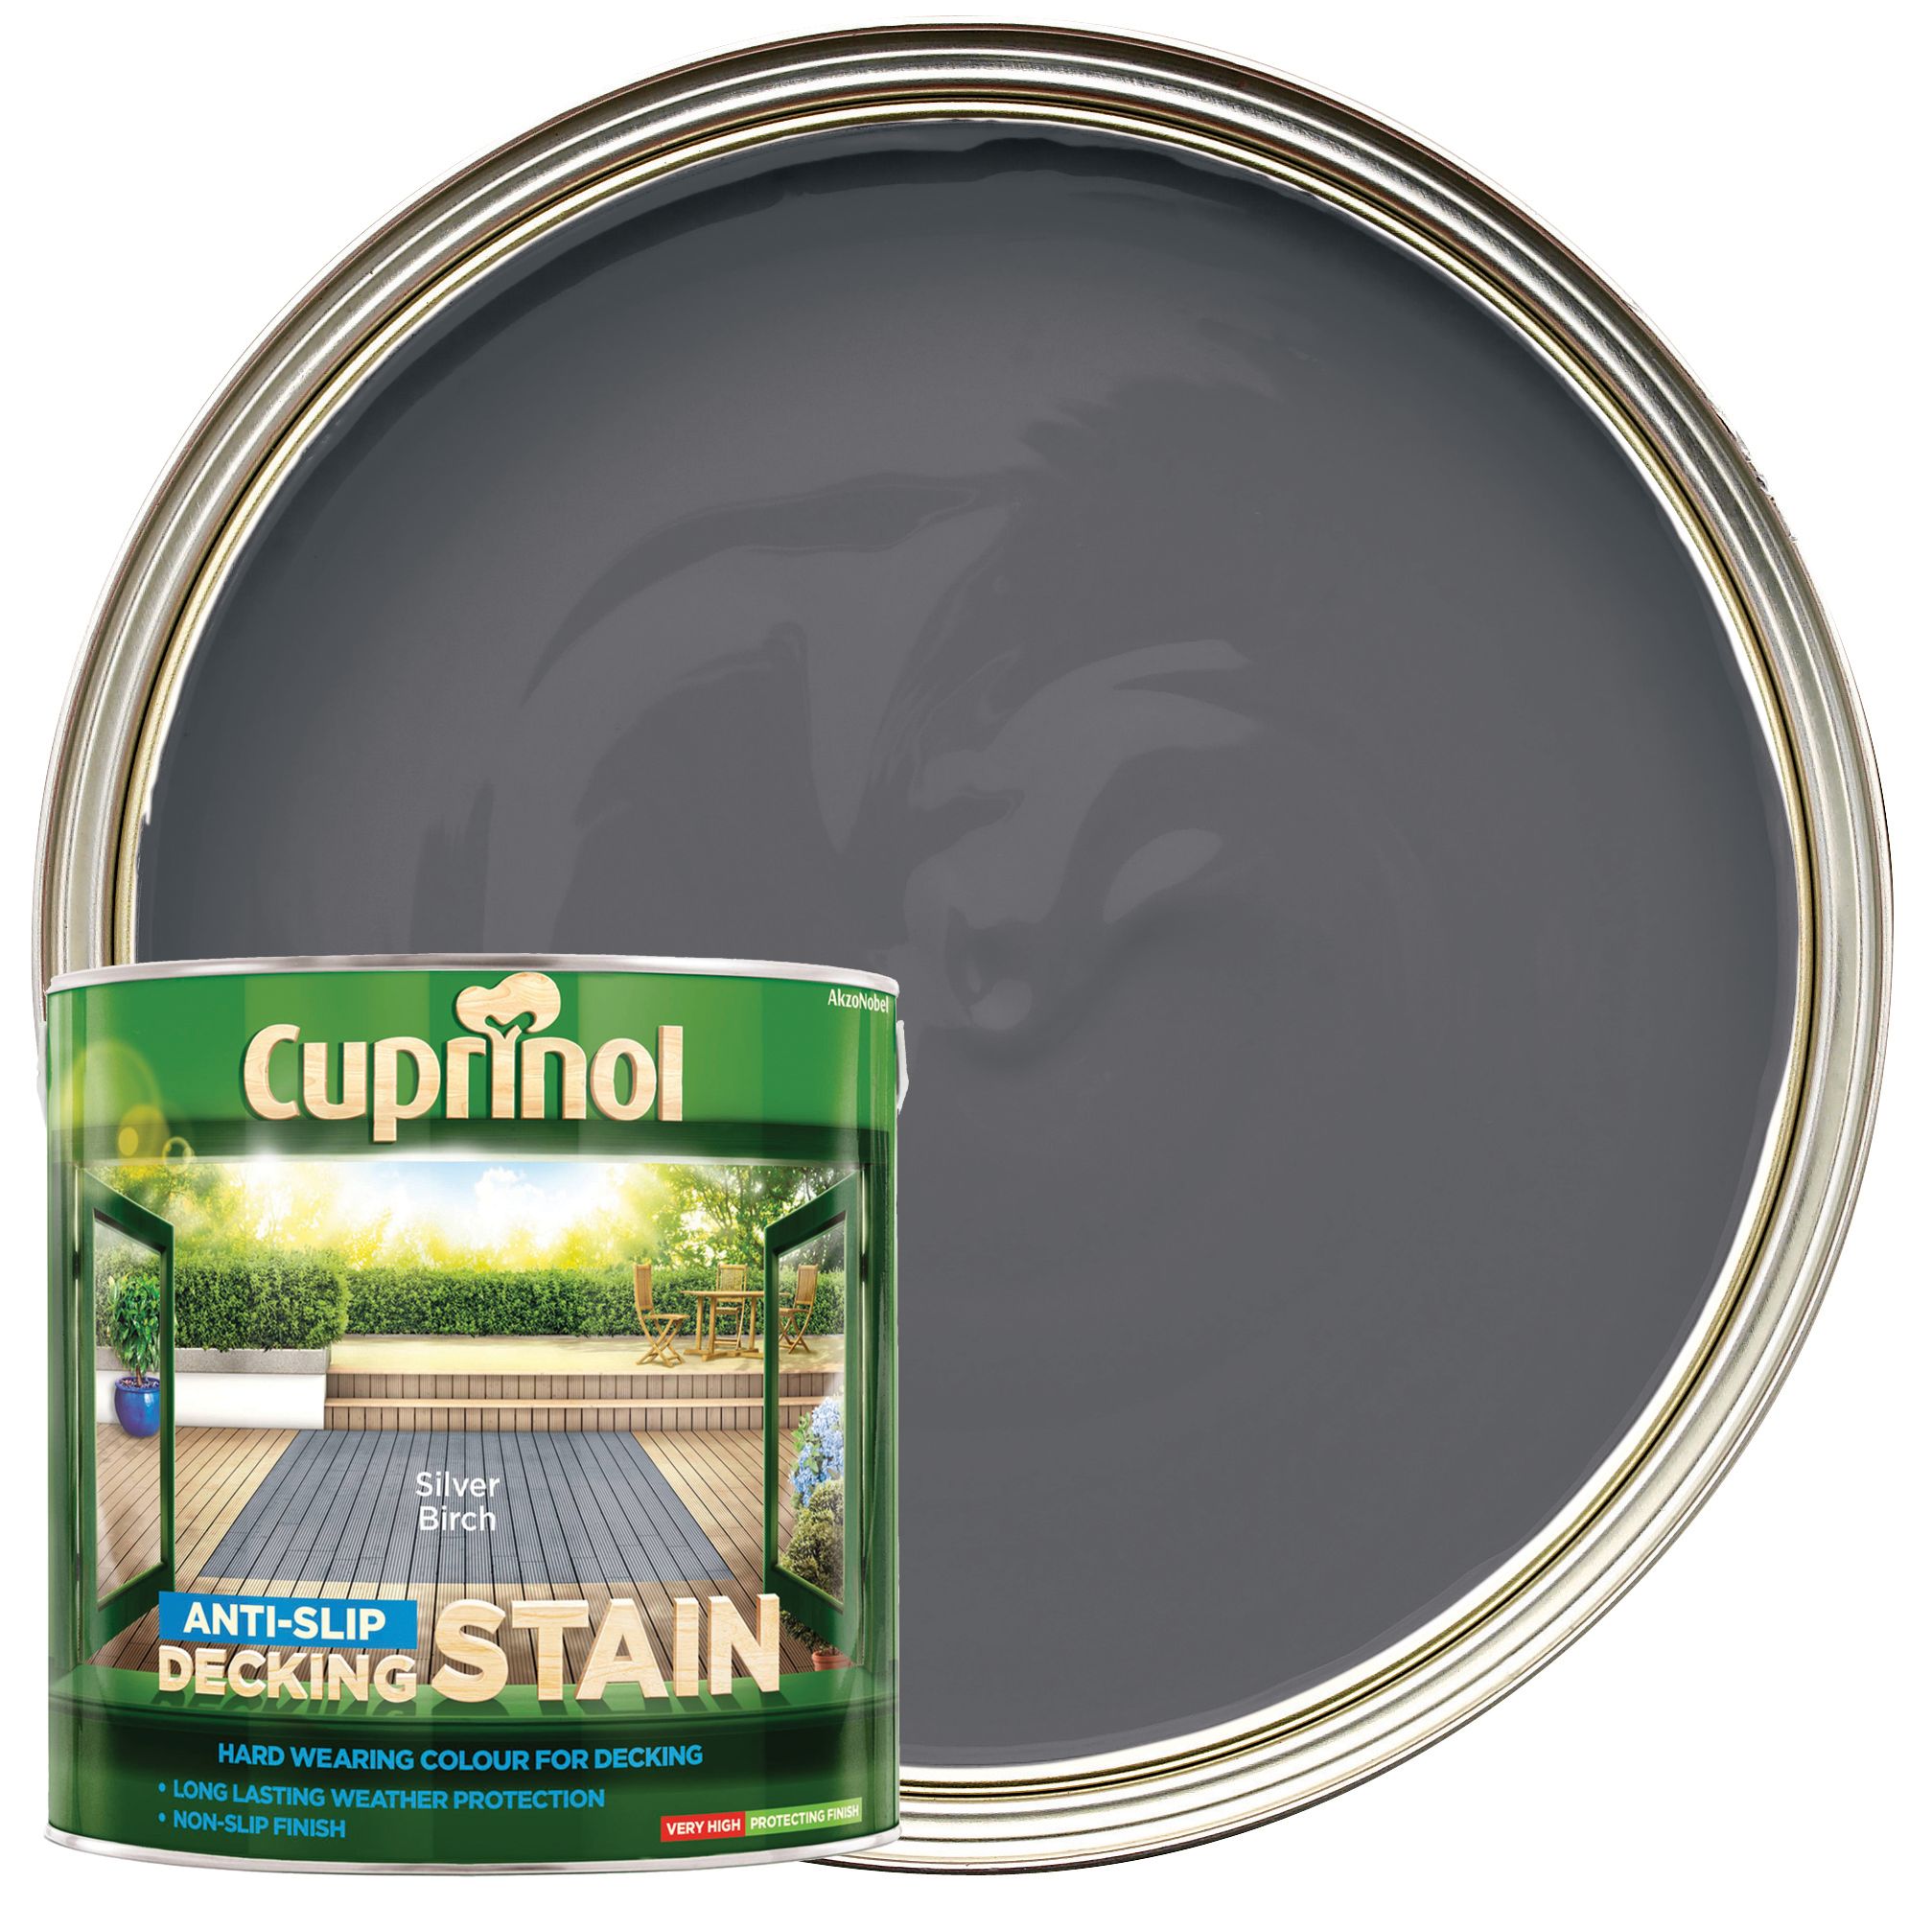 Image of Cuprinol Anti-Slip Decking Stain Silver Birch 2.5L